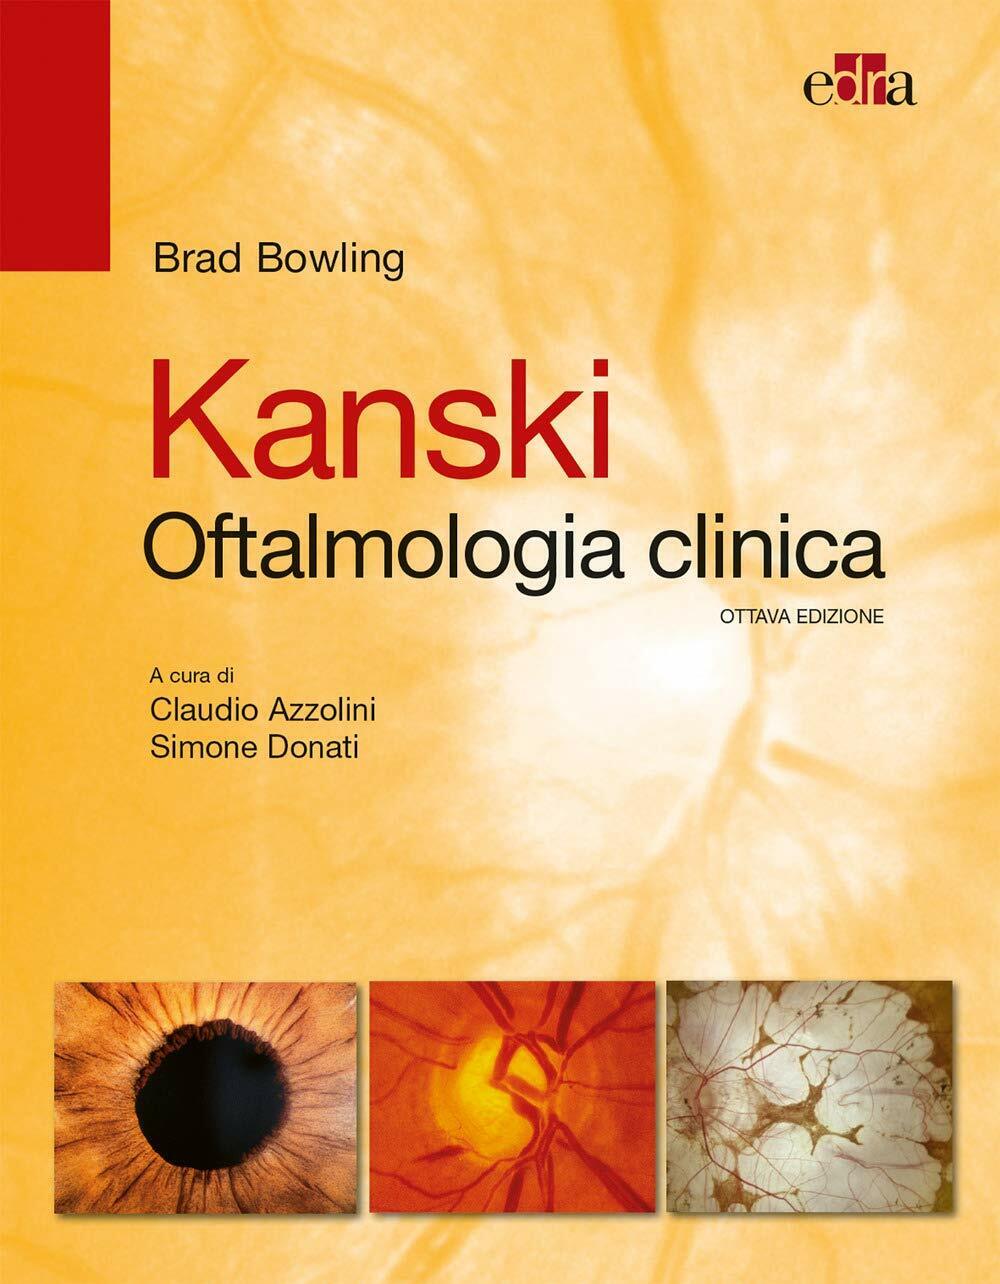 Kanski. Oftalmologia clinica - Brad Bowling - Edra, 2017